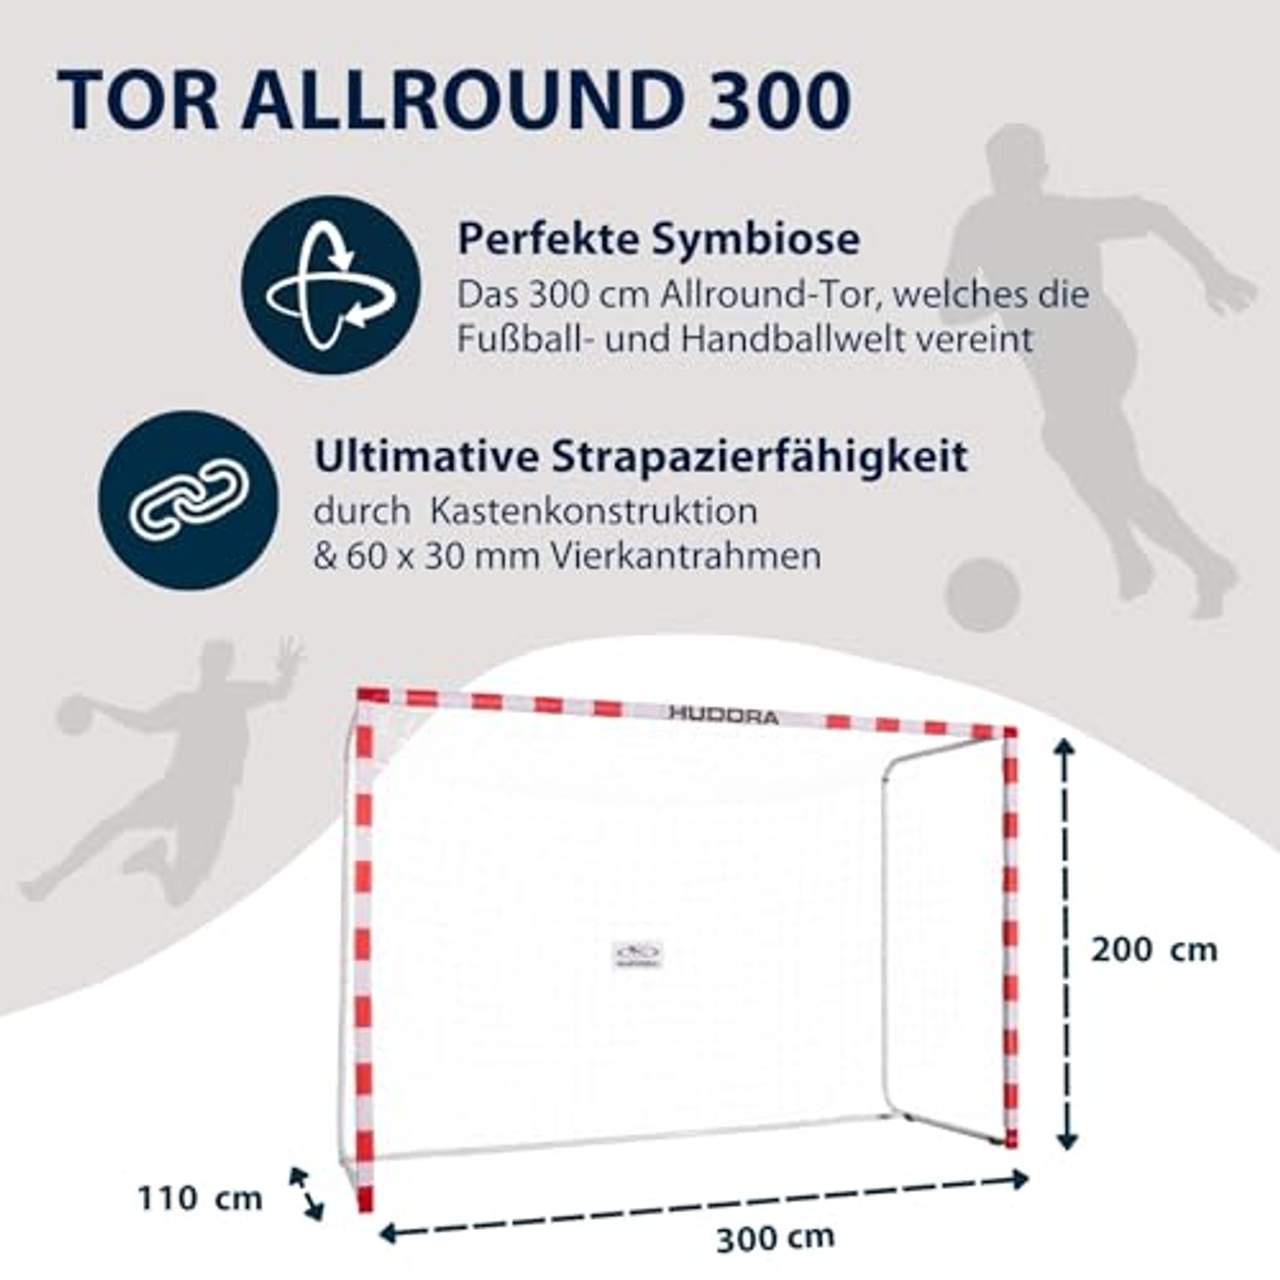 HUDORA Fußball-Tor Allround 300